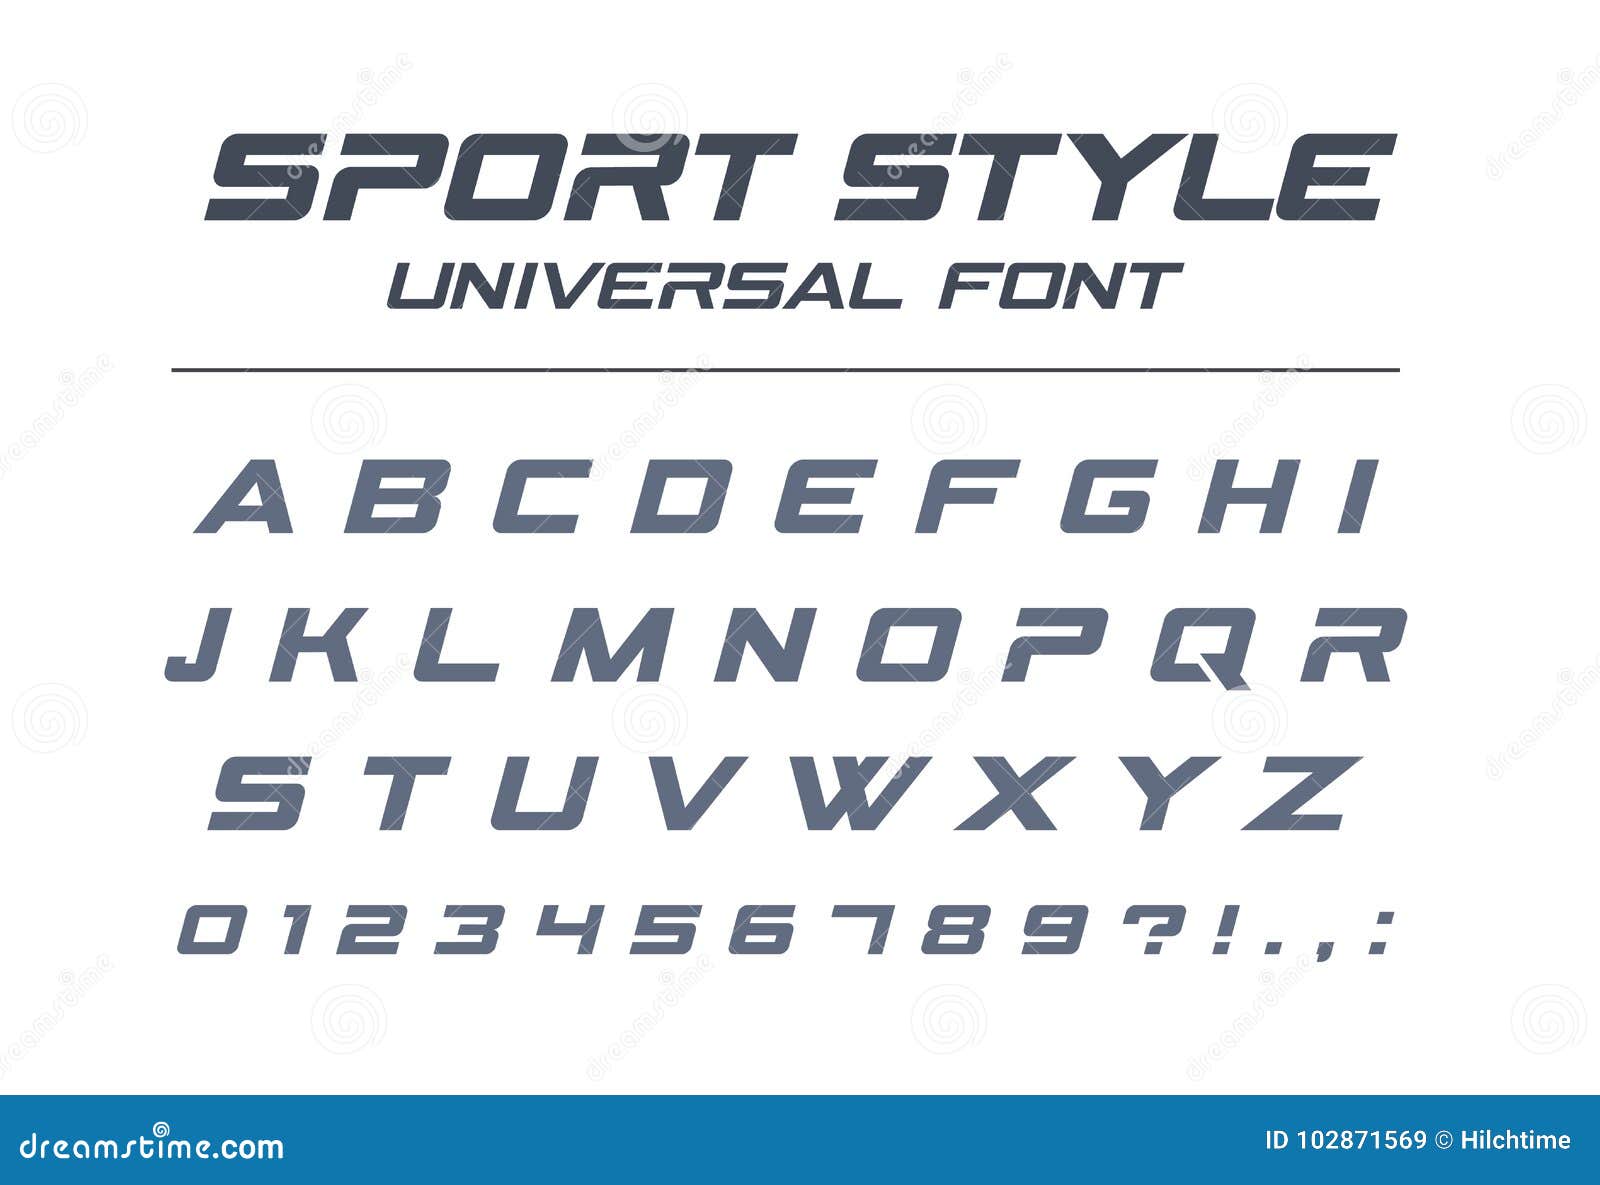 sport style universal font. fast speed, futuristic, technology, future alphabet.